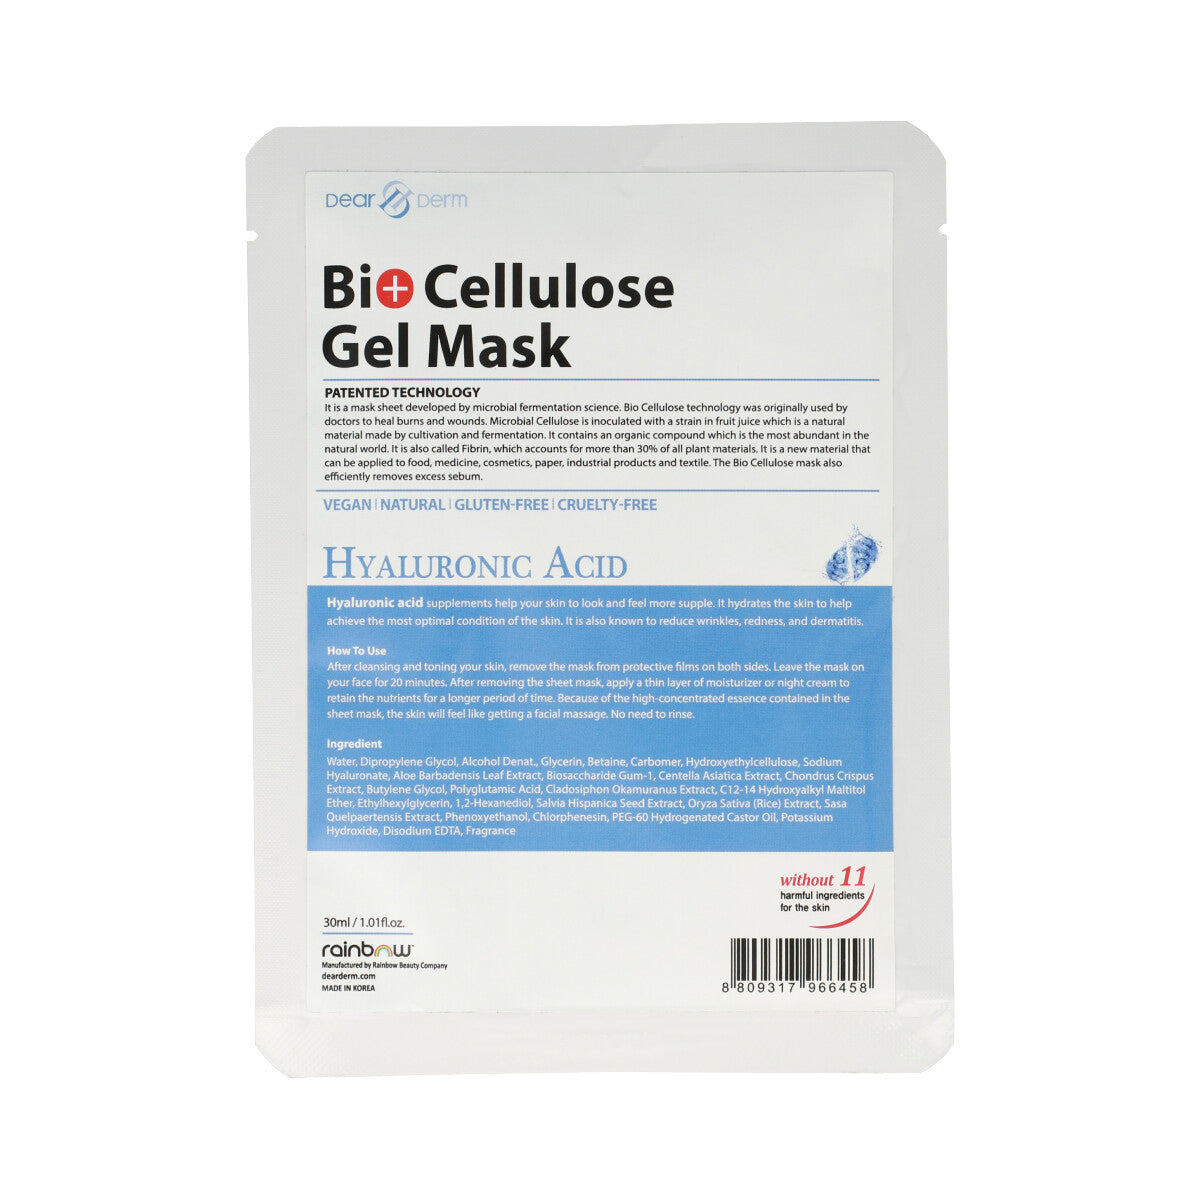 Bio Cellulose Gel Mask Hyaluronic Acid